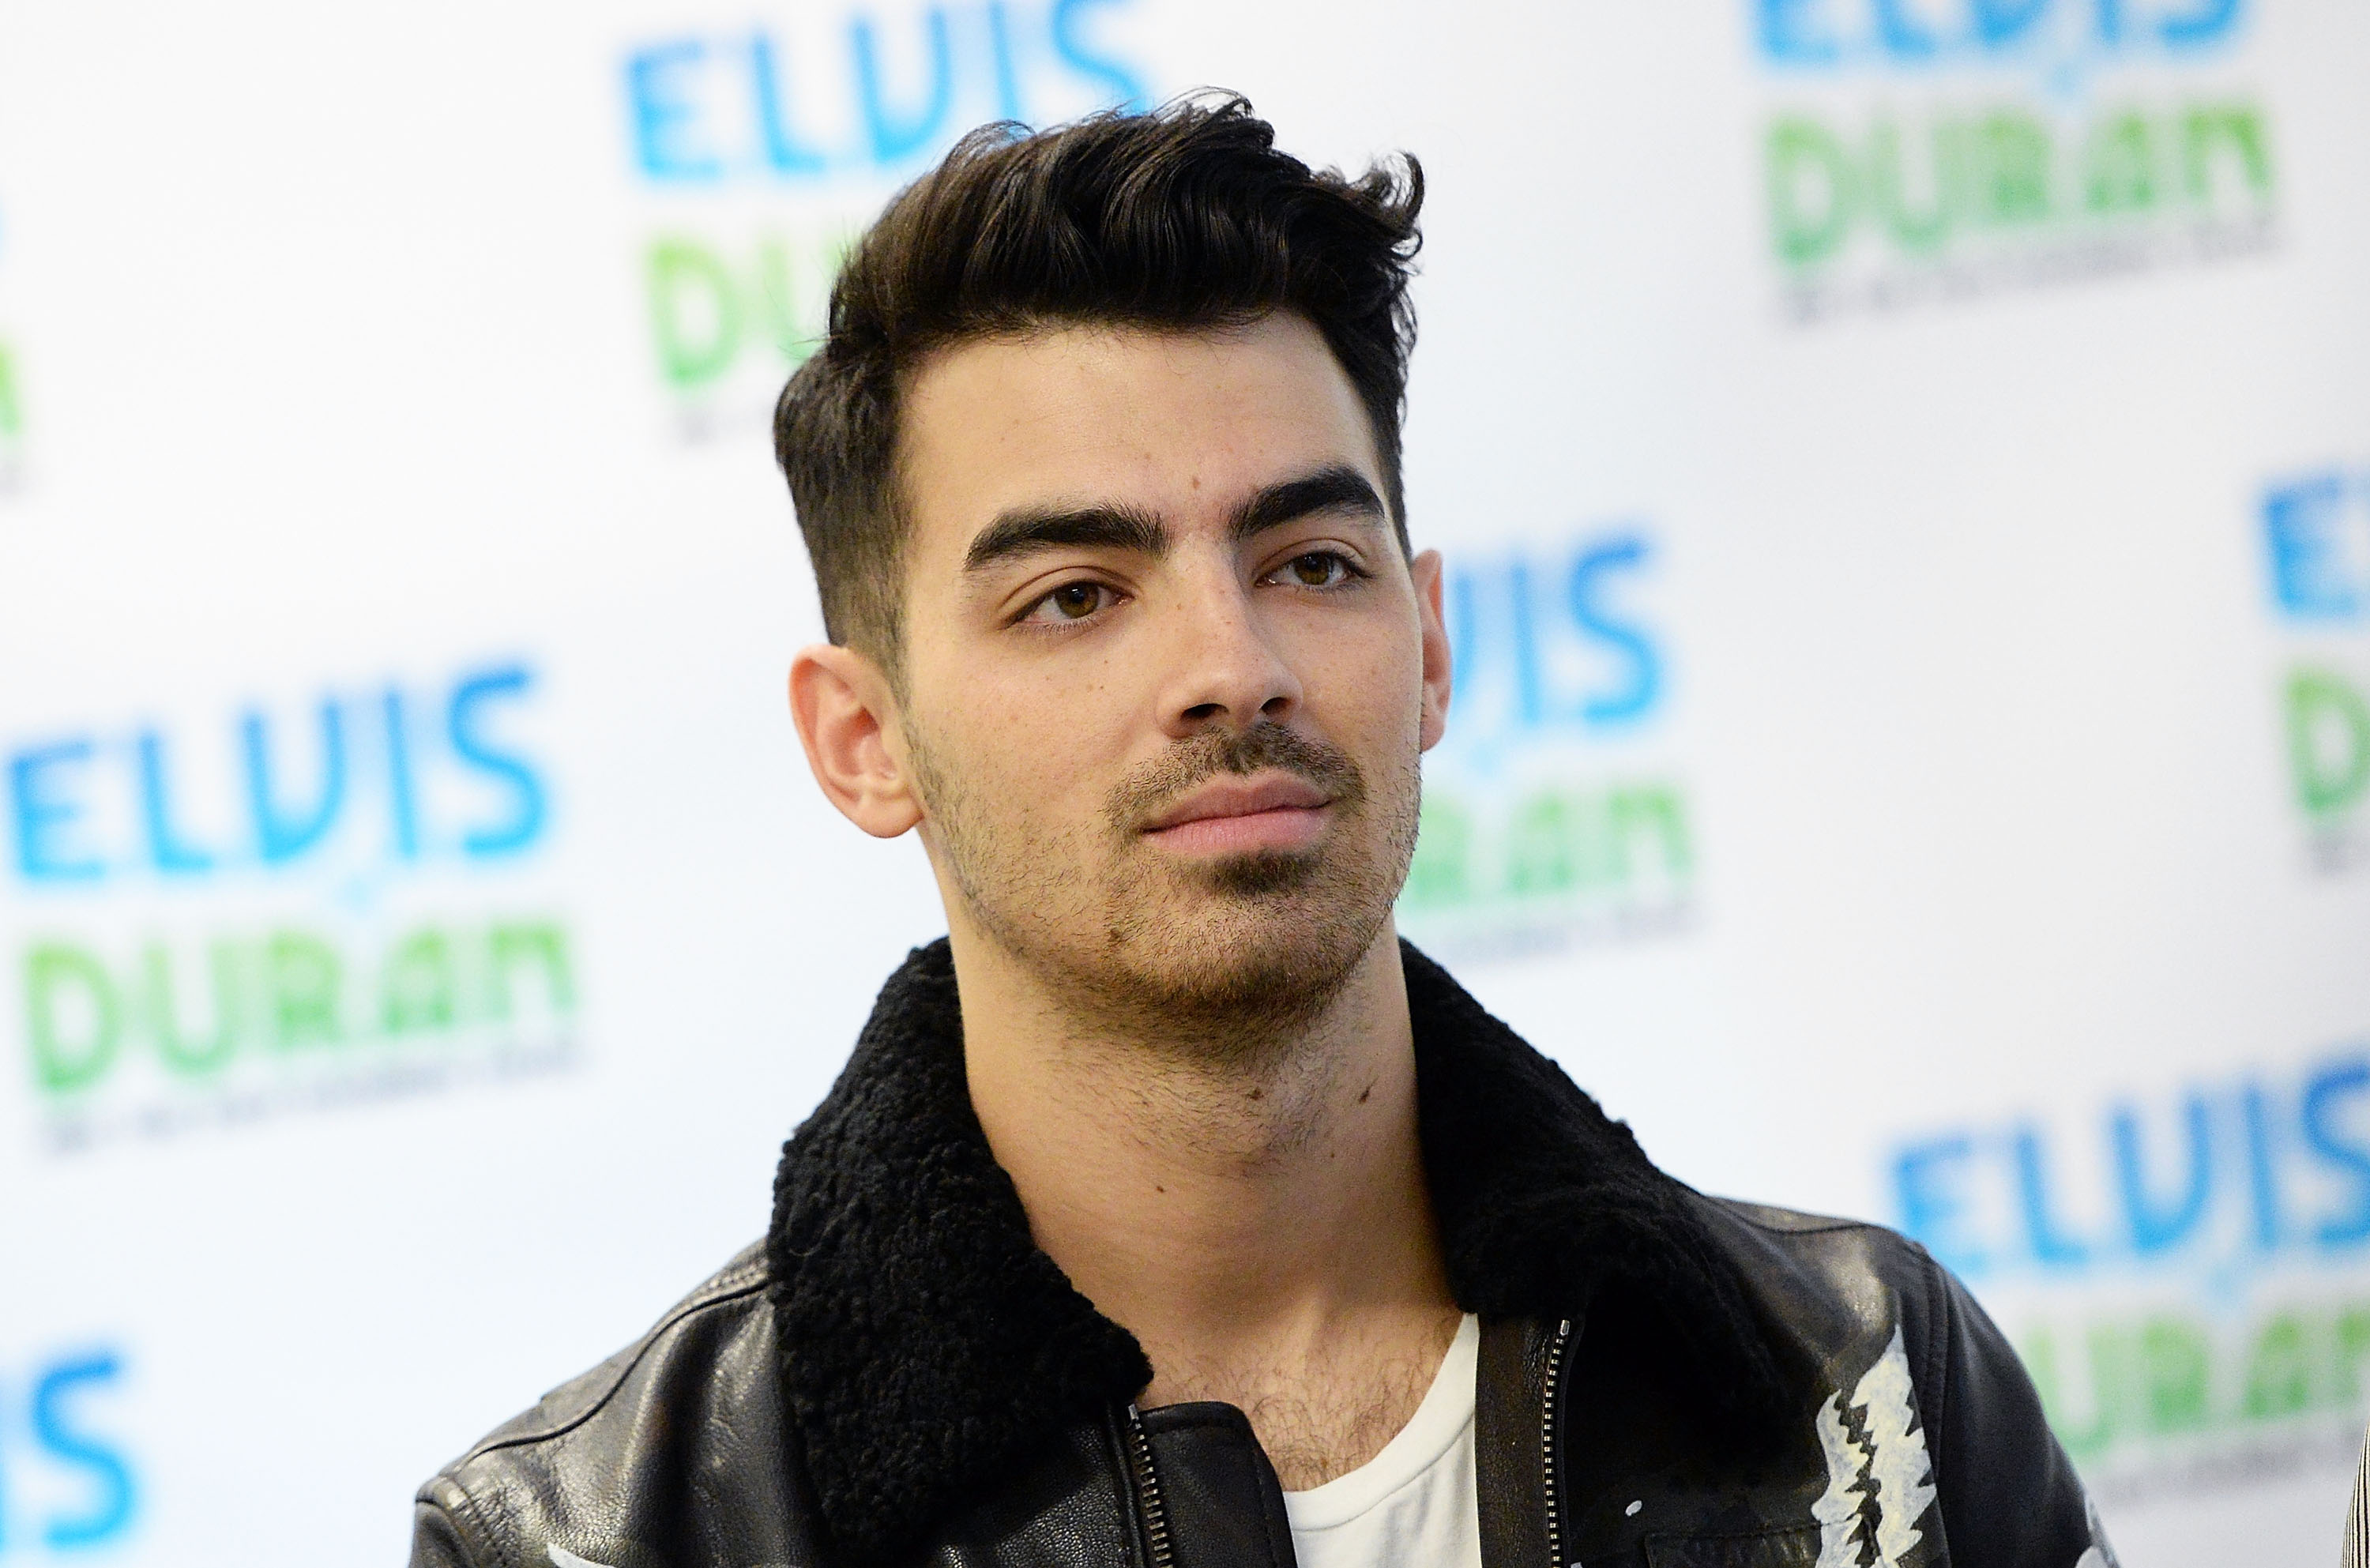 Joe Jonas Hairstyles, Hair Cuts and Colors